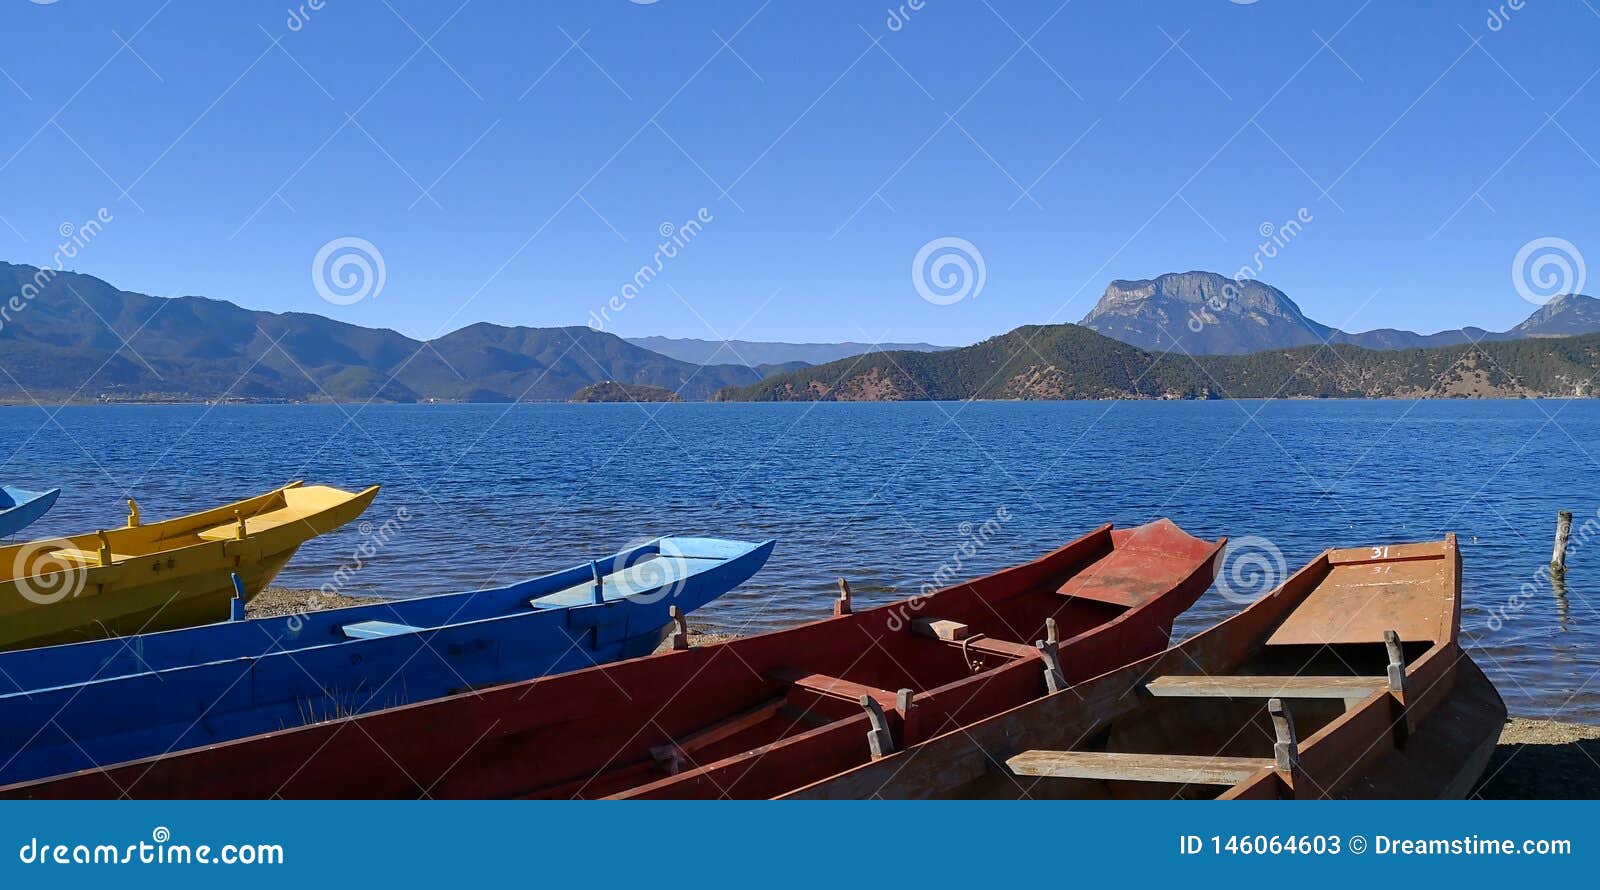 colourful boat. colorful boat in the Lugu Lake